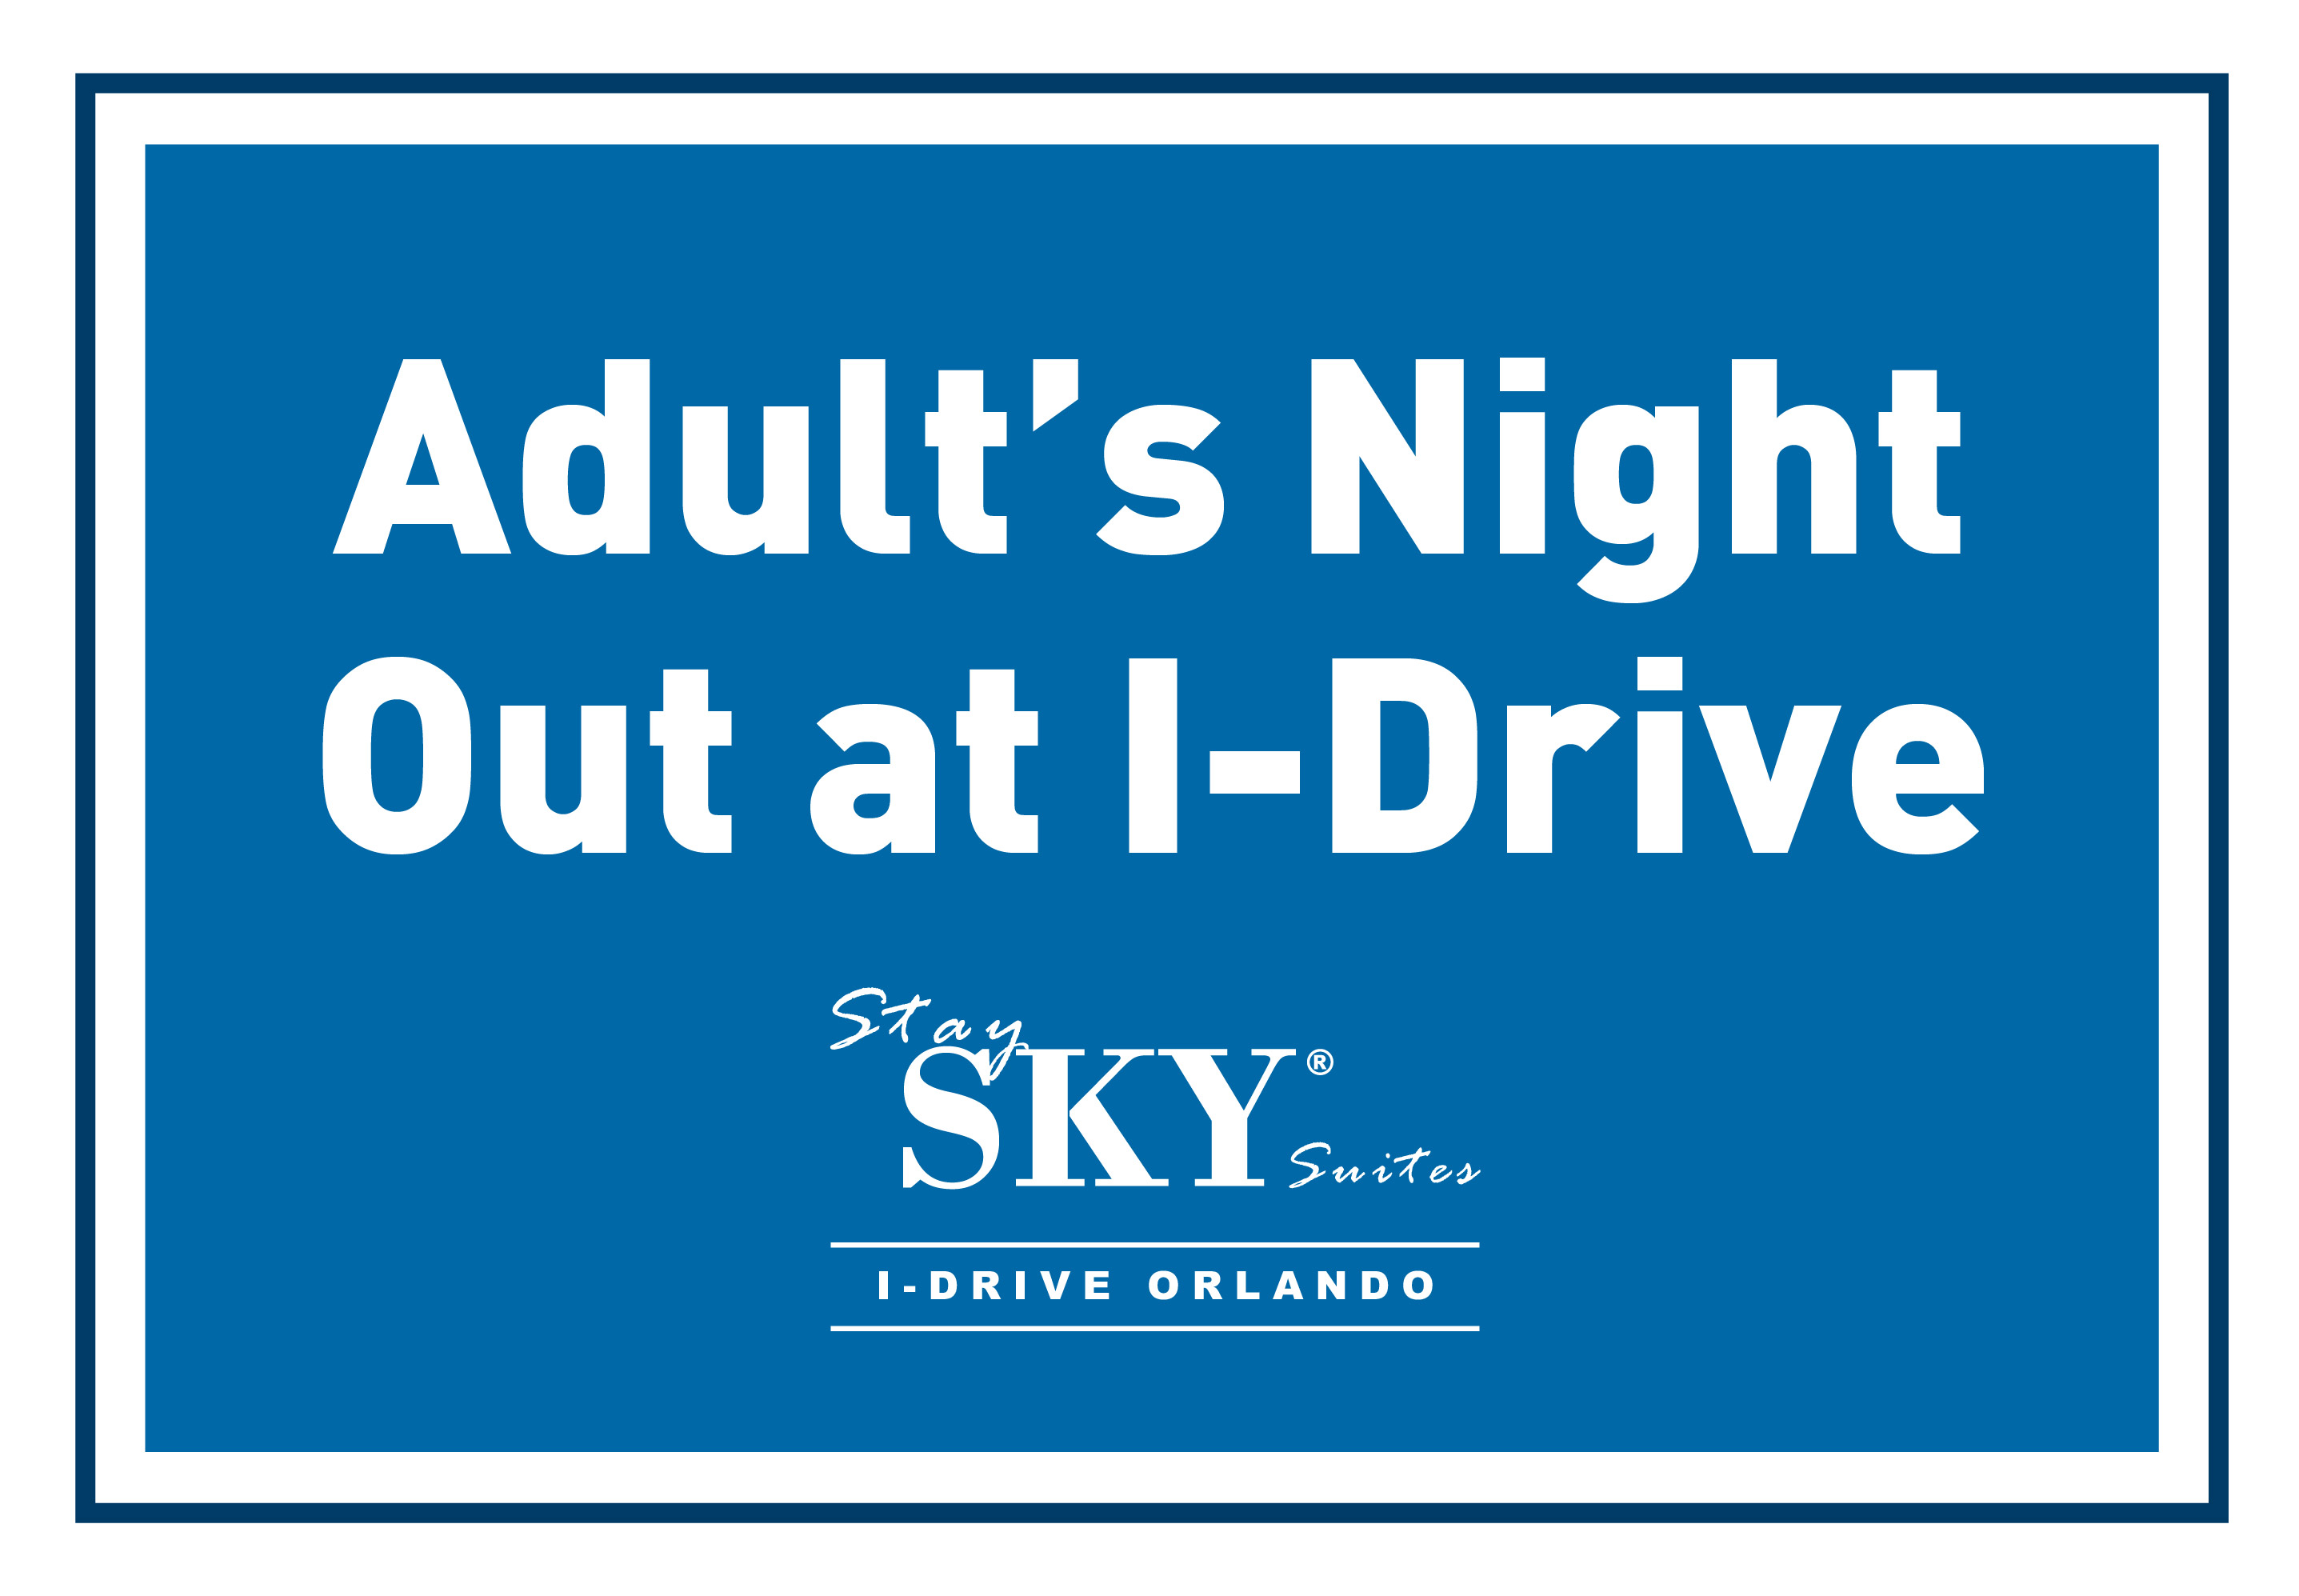 StaySky Suites I - Drive - Orlando Resorts - AdultNight